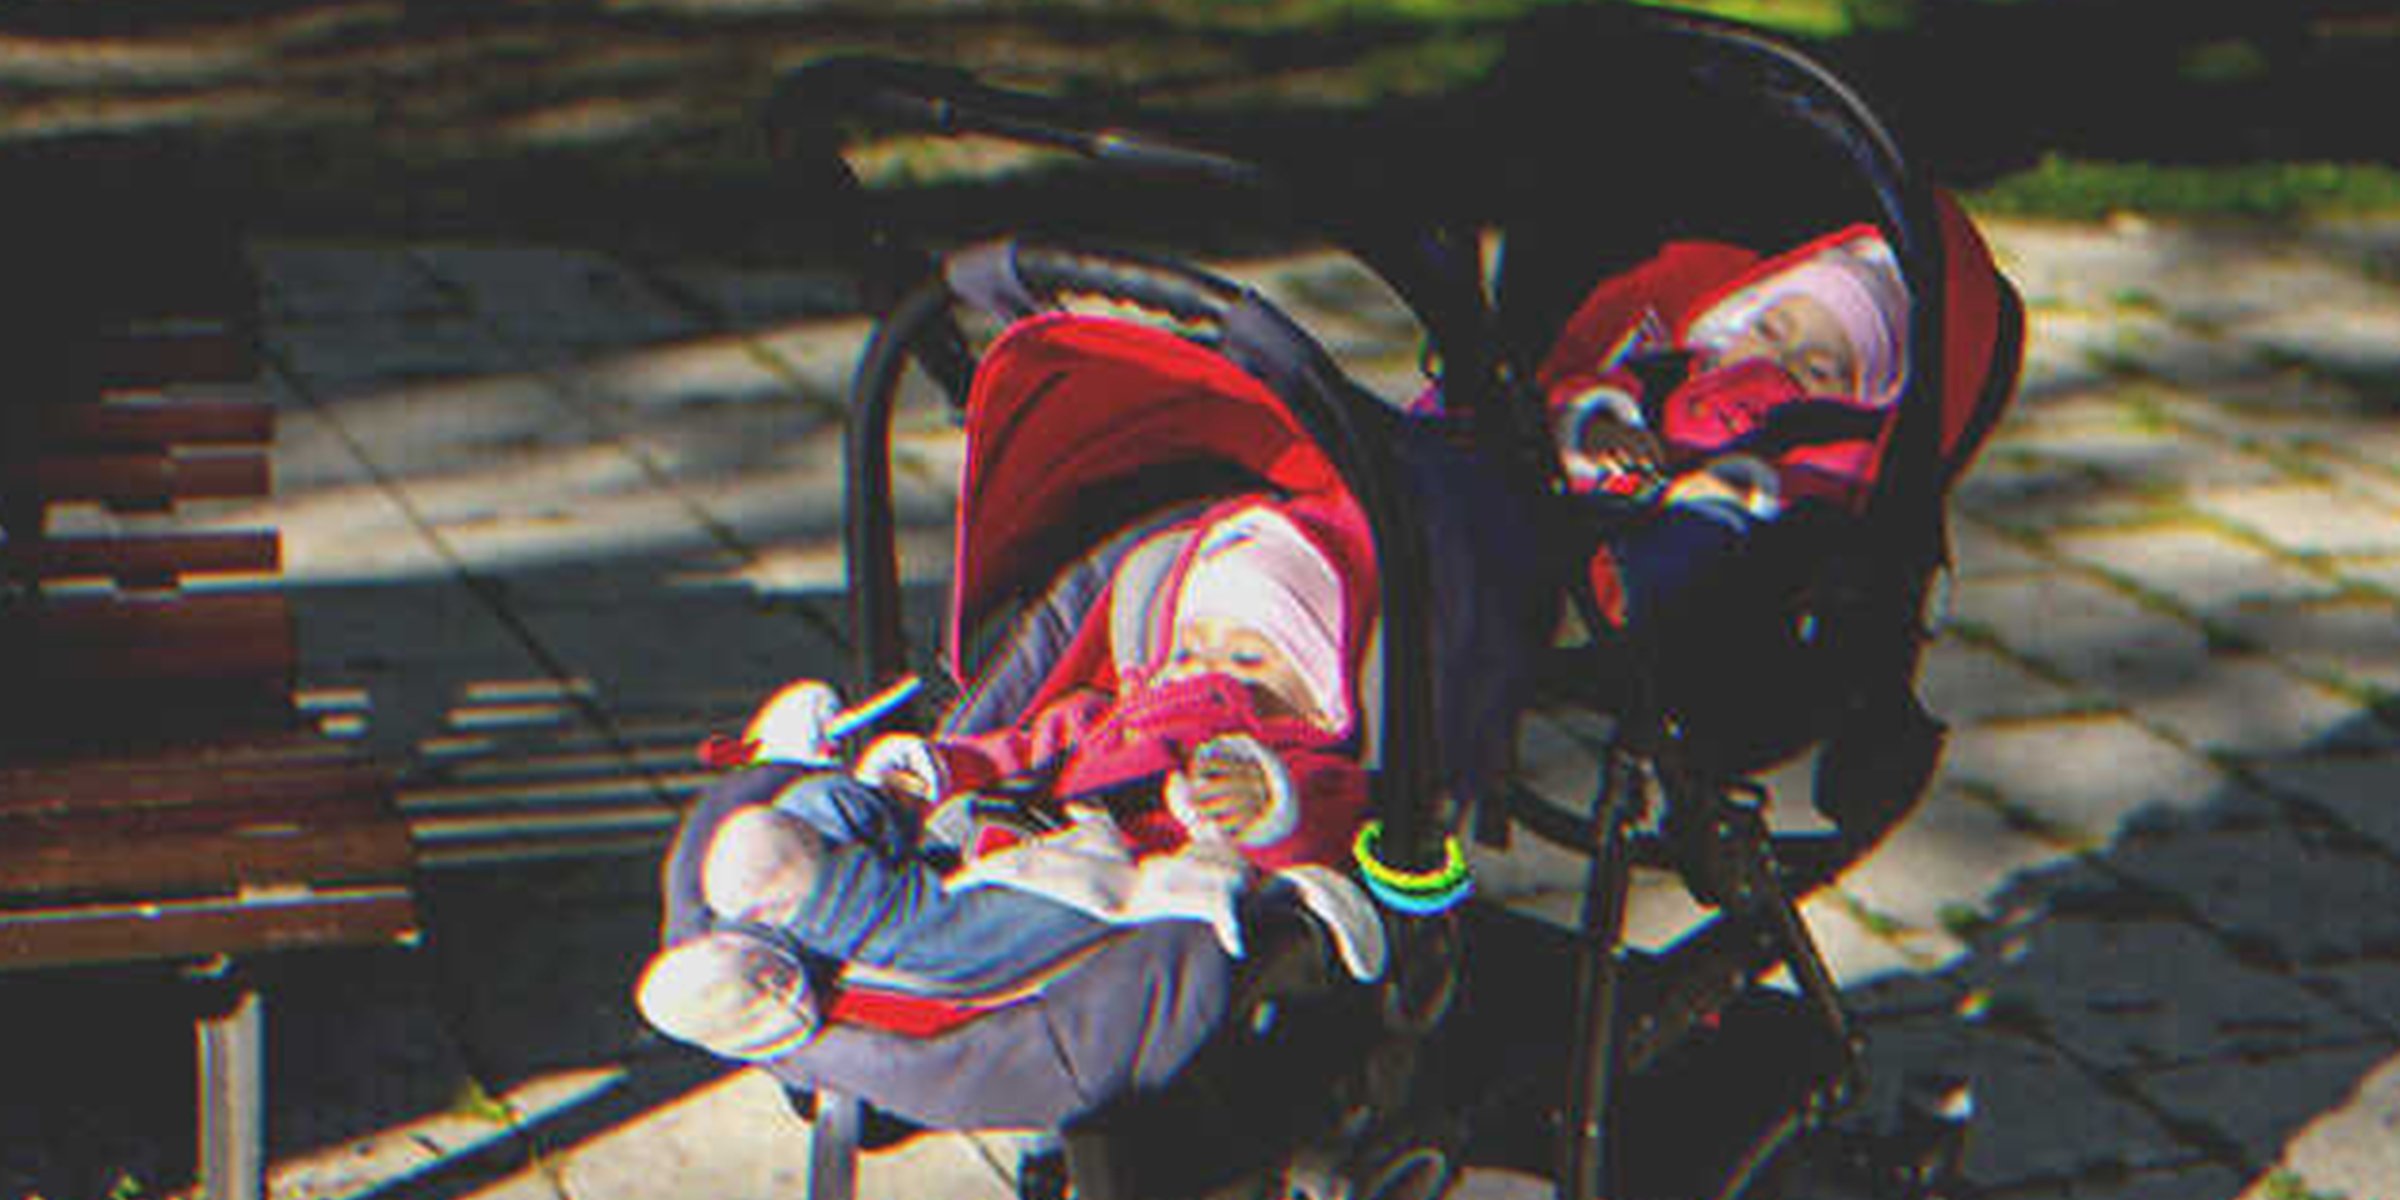 Two babies in a stroller | Source: Shutterstock